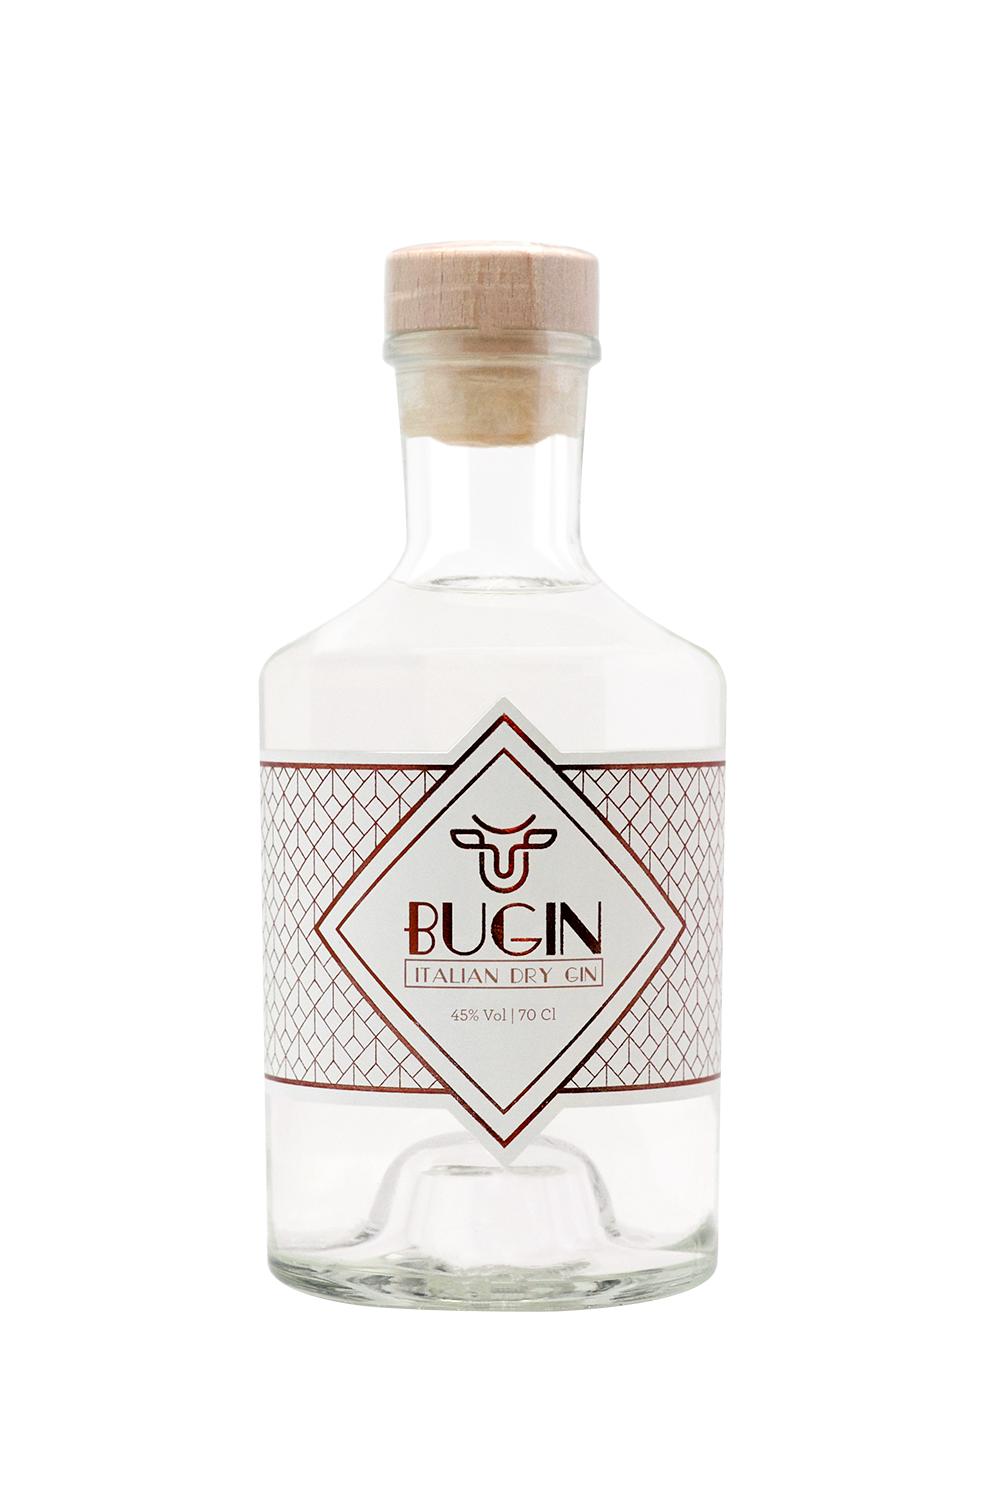 41.92 - € - Bugin Gin nan Soti Dry